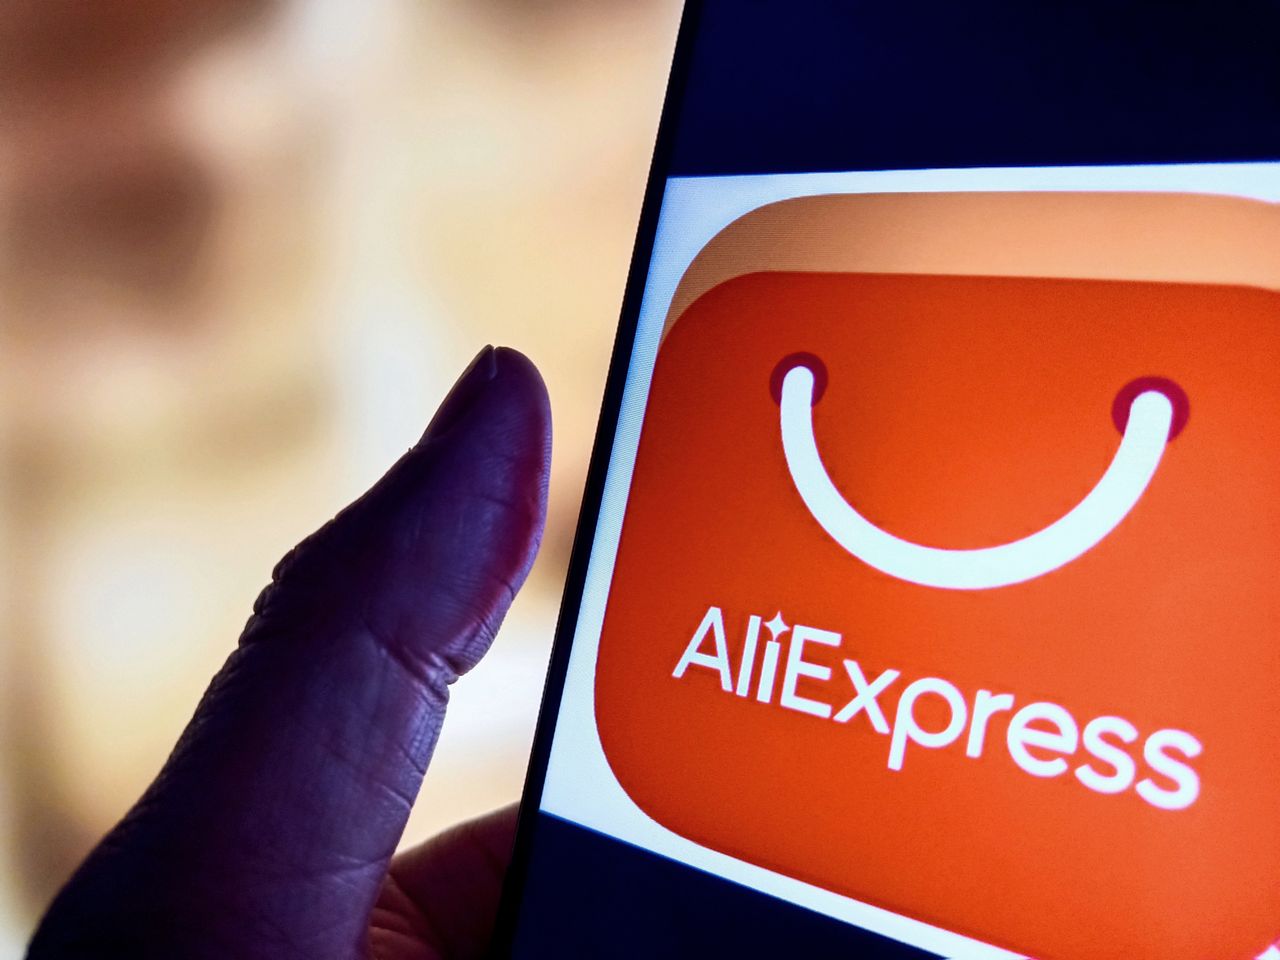 European Commission investigates AliExpress for illegal sales